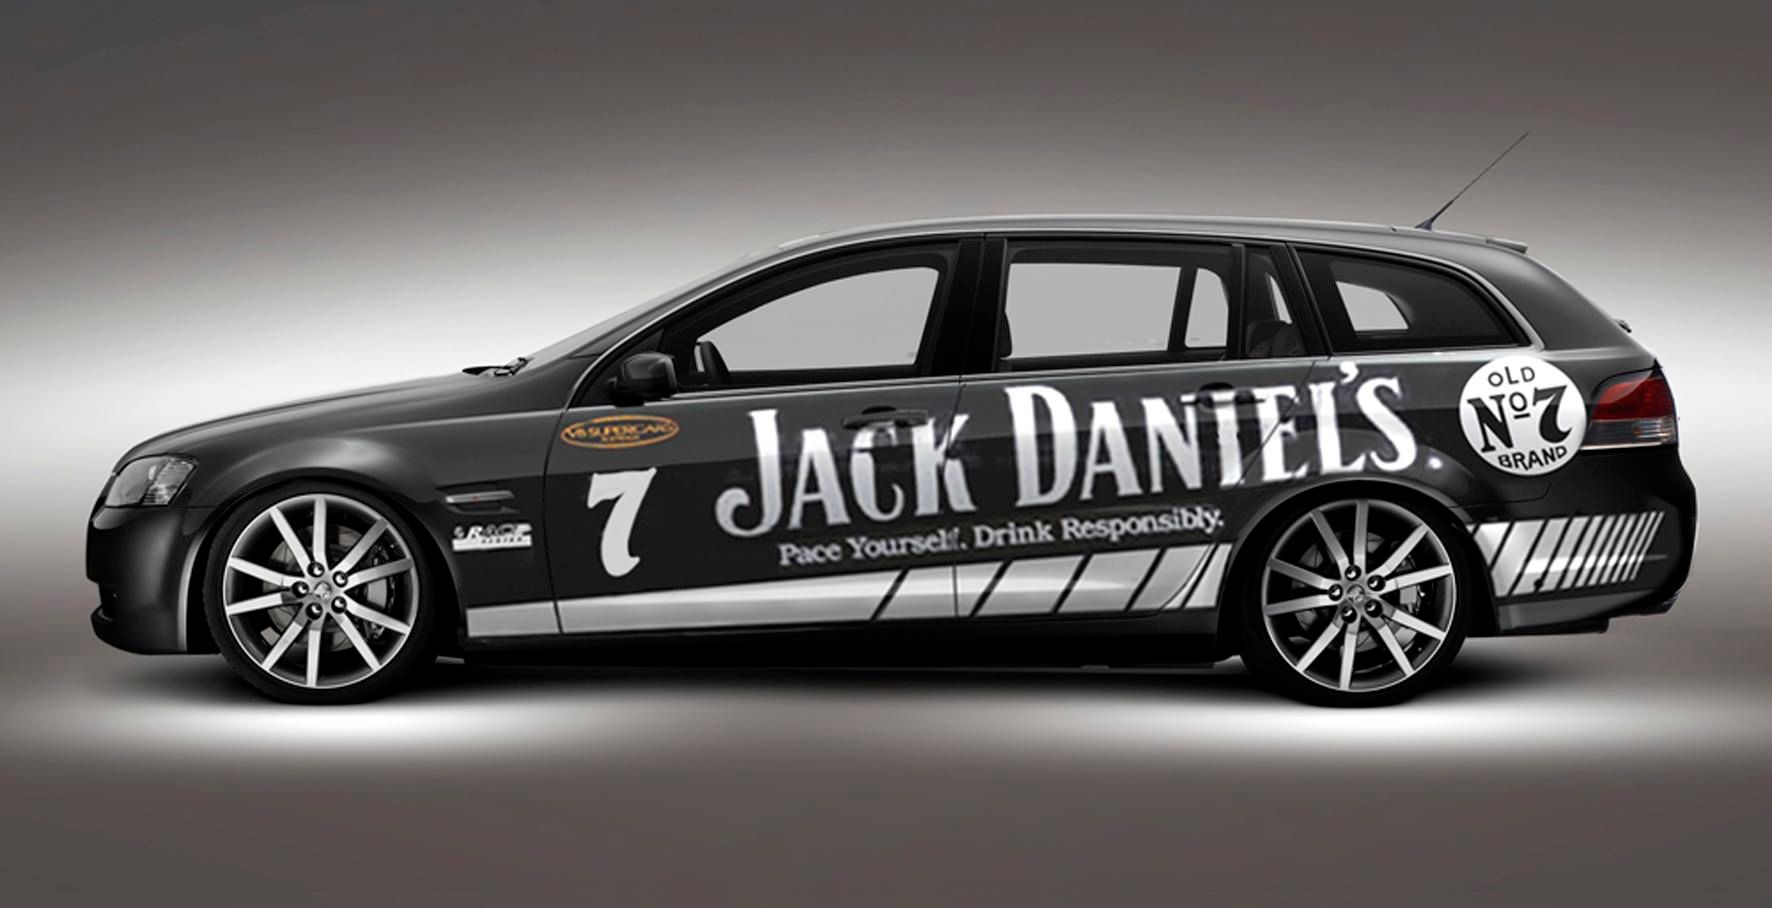 2008 Holden VE Sportwagon Jack Daniel’s